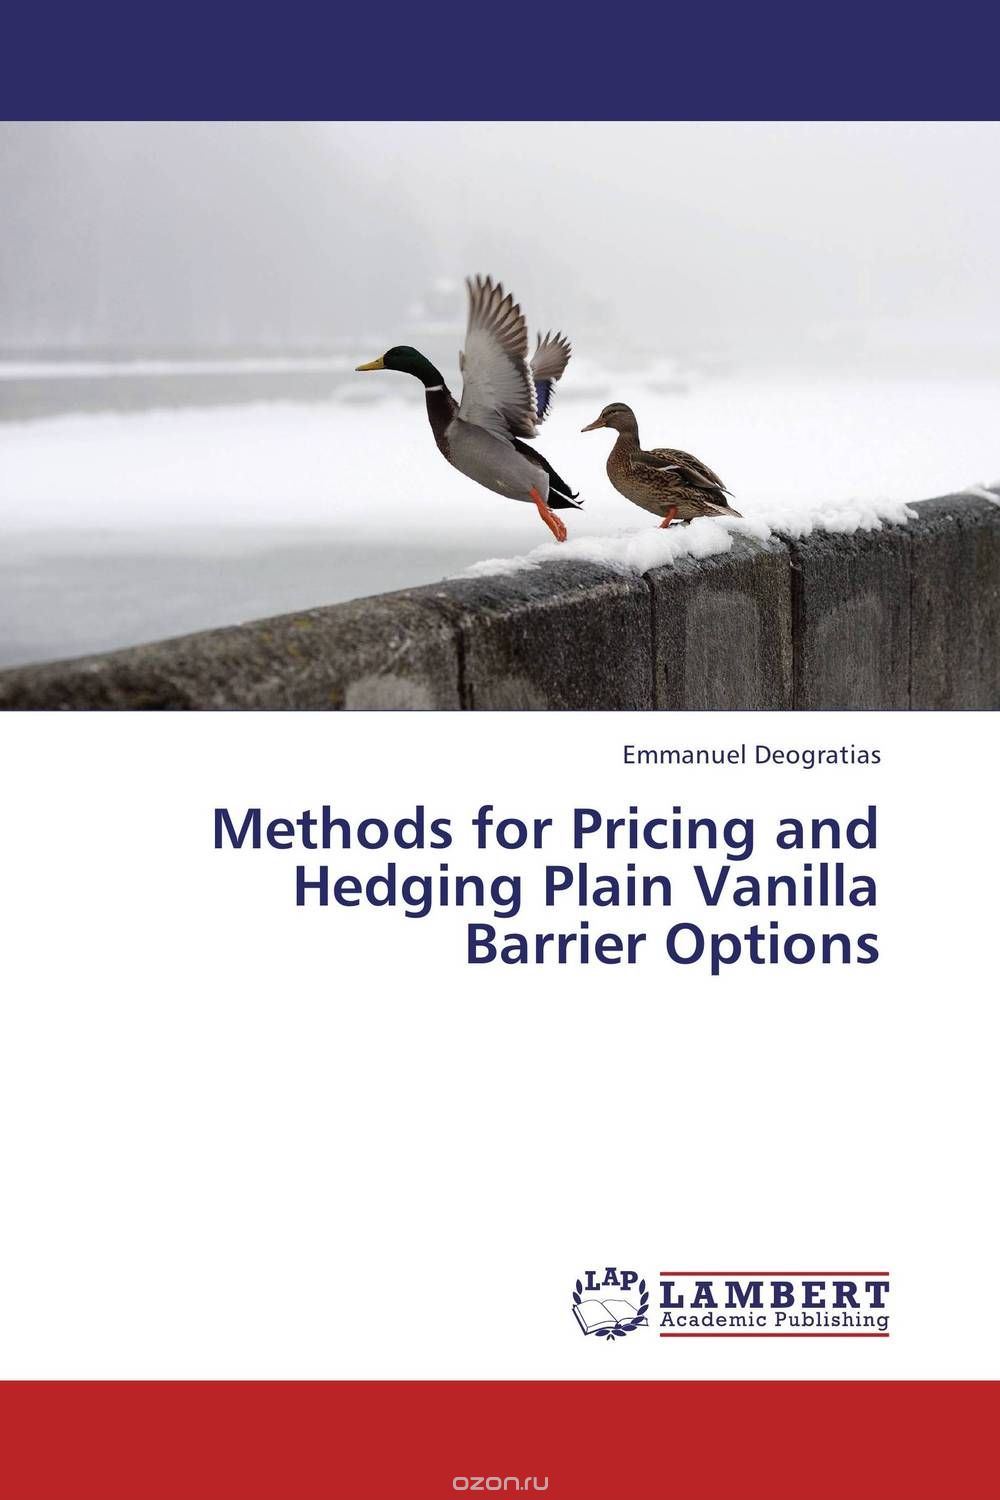 Скачать книгу "Methods for Pricing and Hedging Plain Vanilla Barrier Options"